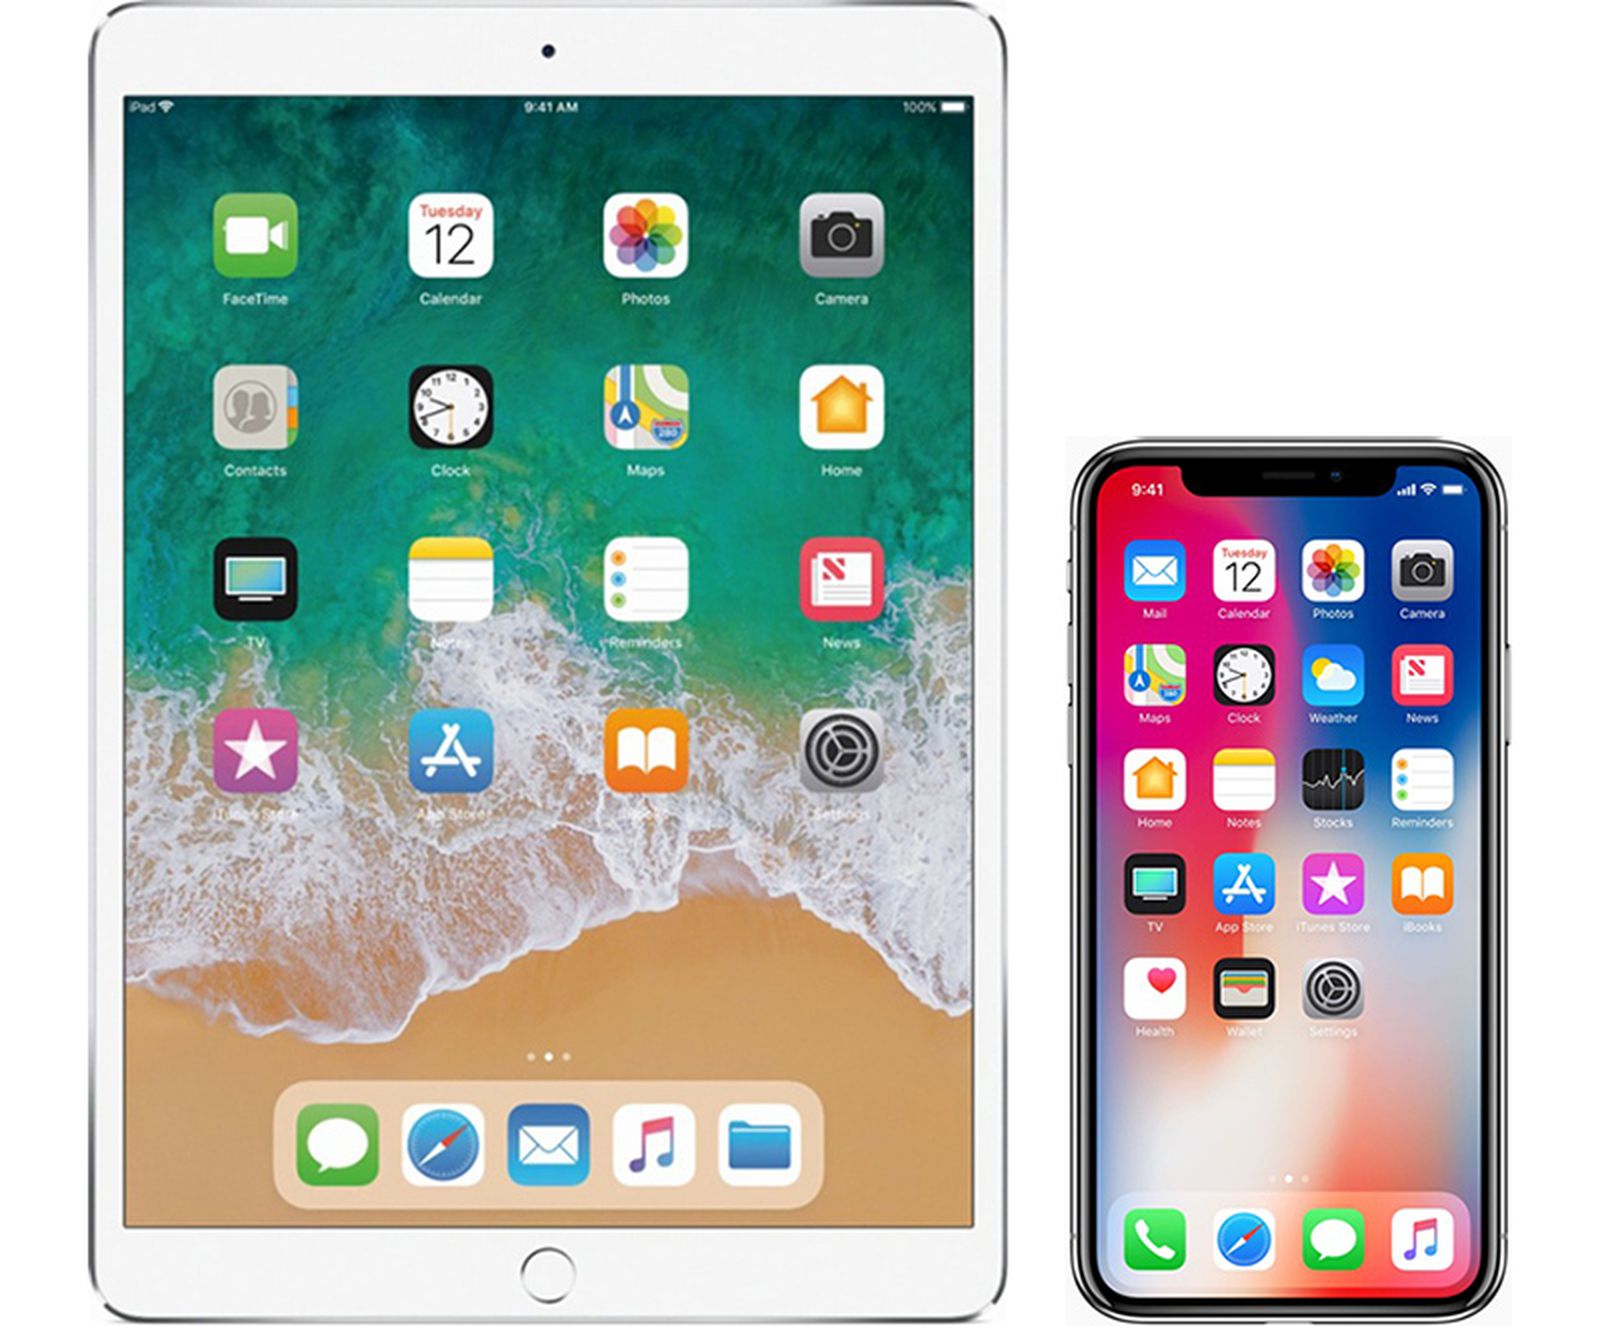 Apple Stop Providing Unit Sales Data iPhone, iPad and Mac Starting With December Quarter - MacRumors